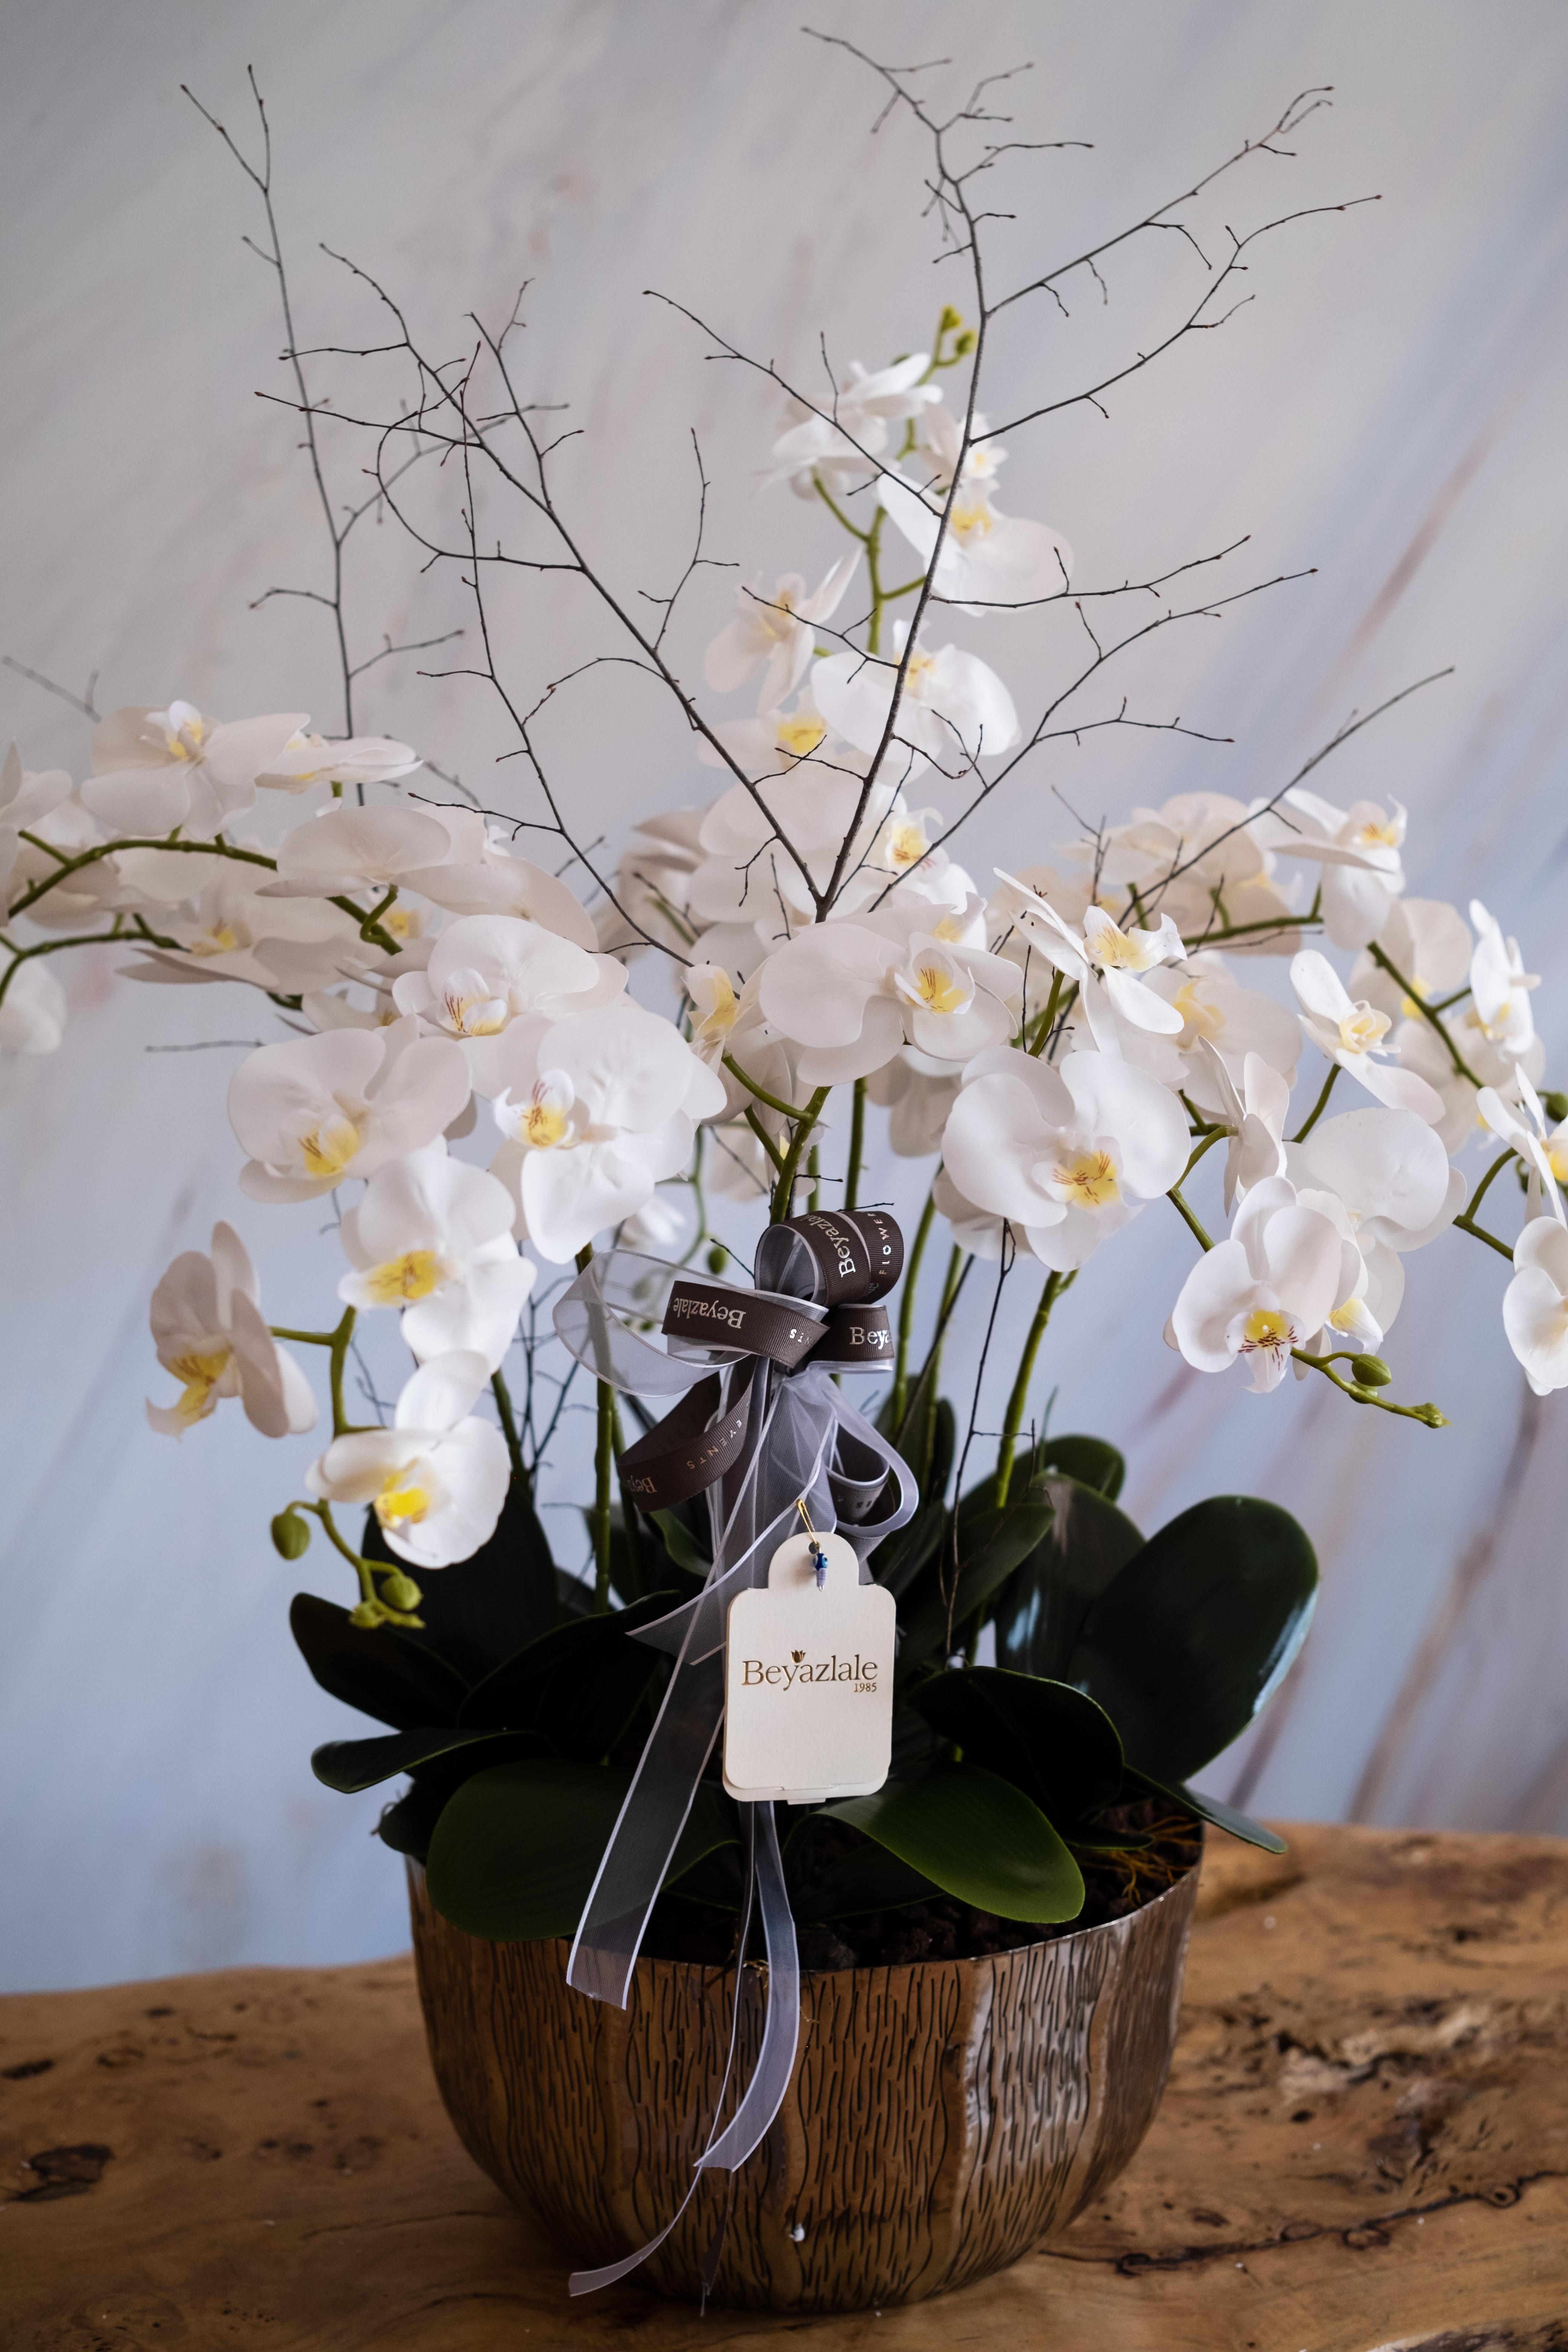 Yapay Orkide Dalı Benekli Beyaz 100 cm